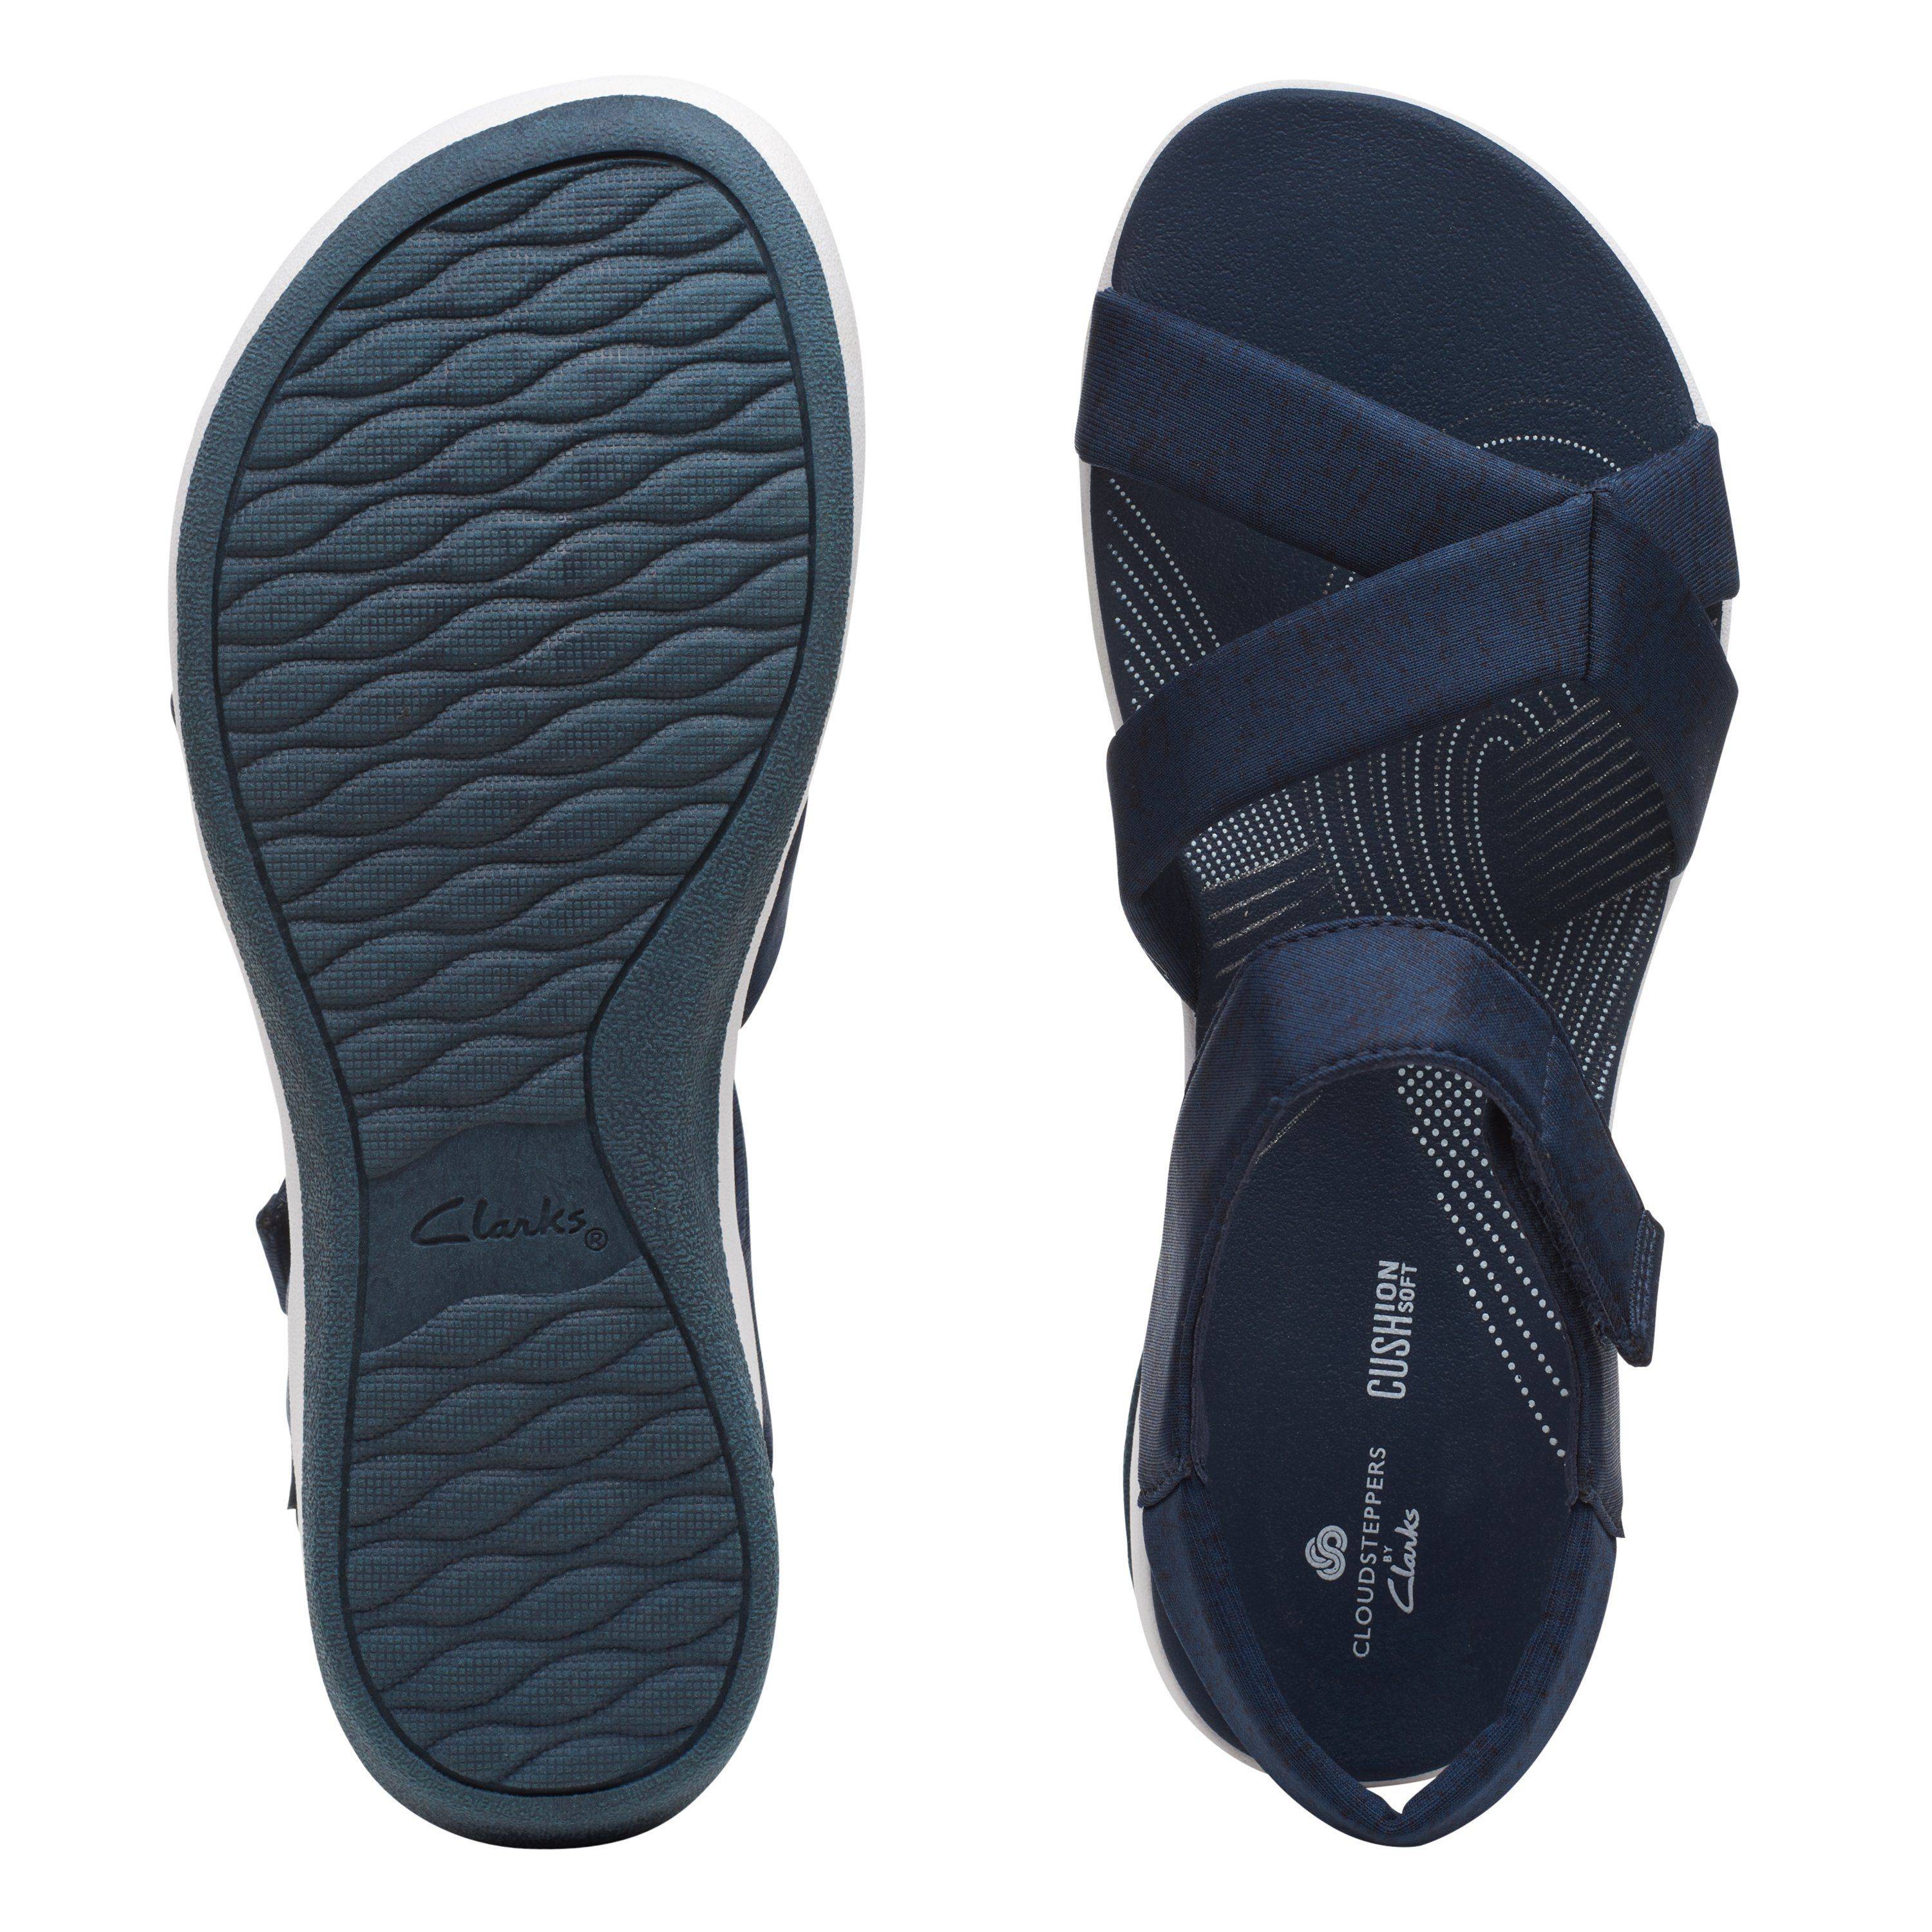 Женские сандалии Clarks, синие, цвет синий, размер 39 - фото 7